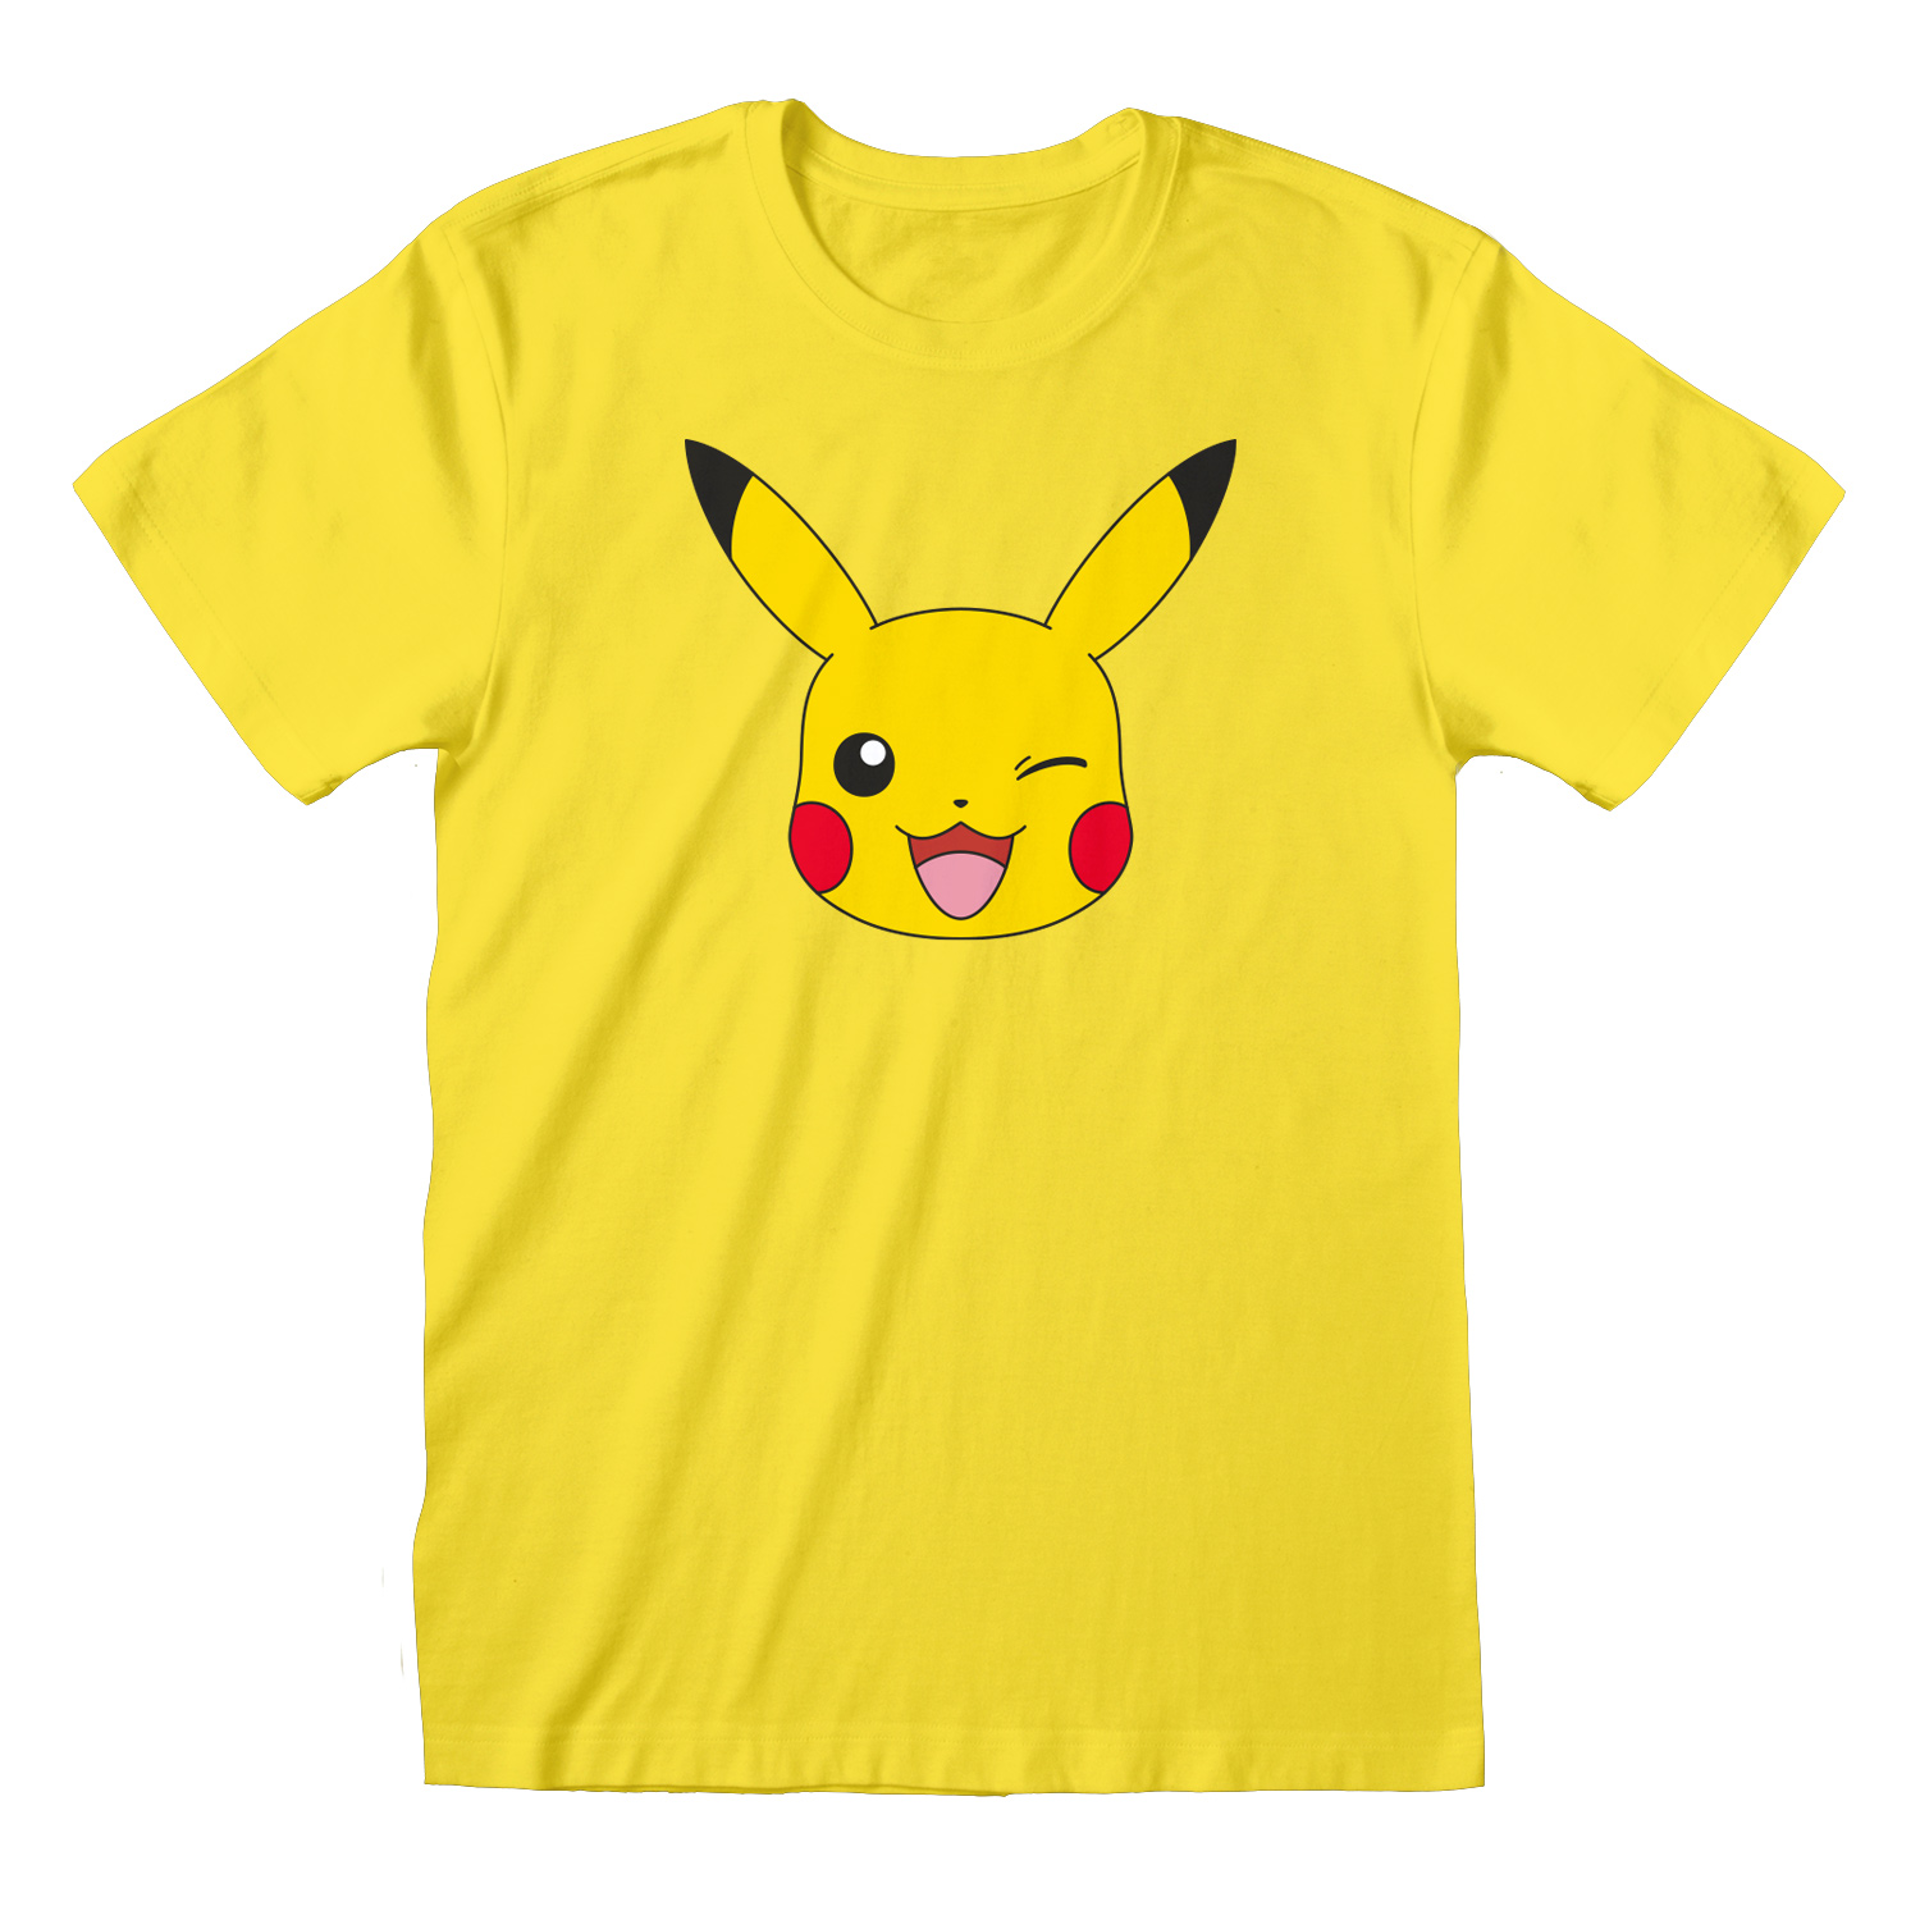 Nintendo - T-Shirt unisexe Jaune Pokémon Tête de Pikachu - S